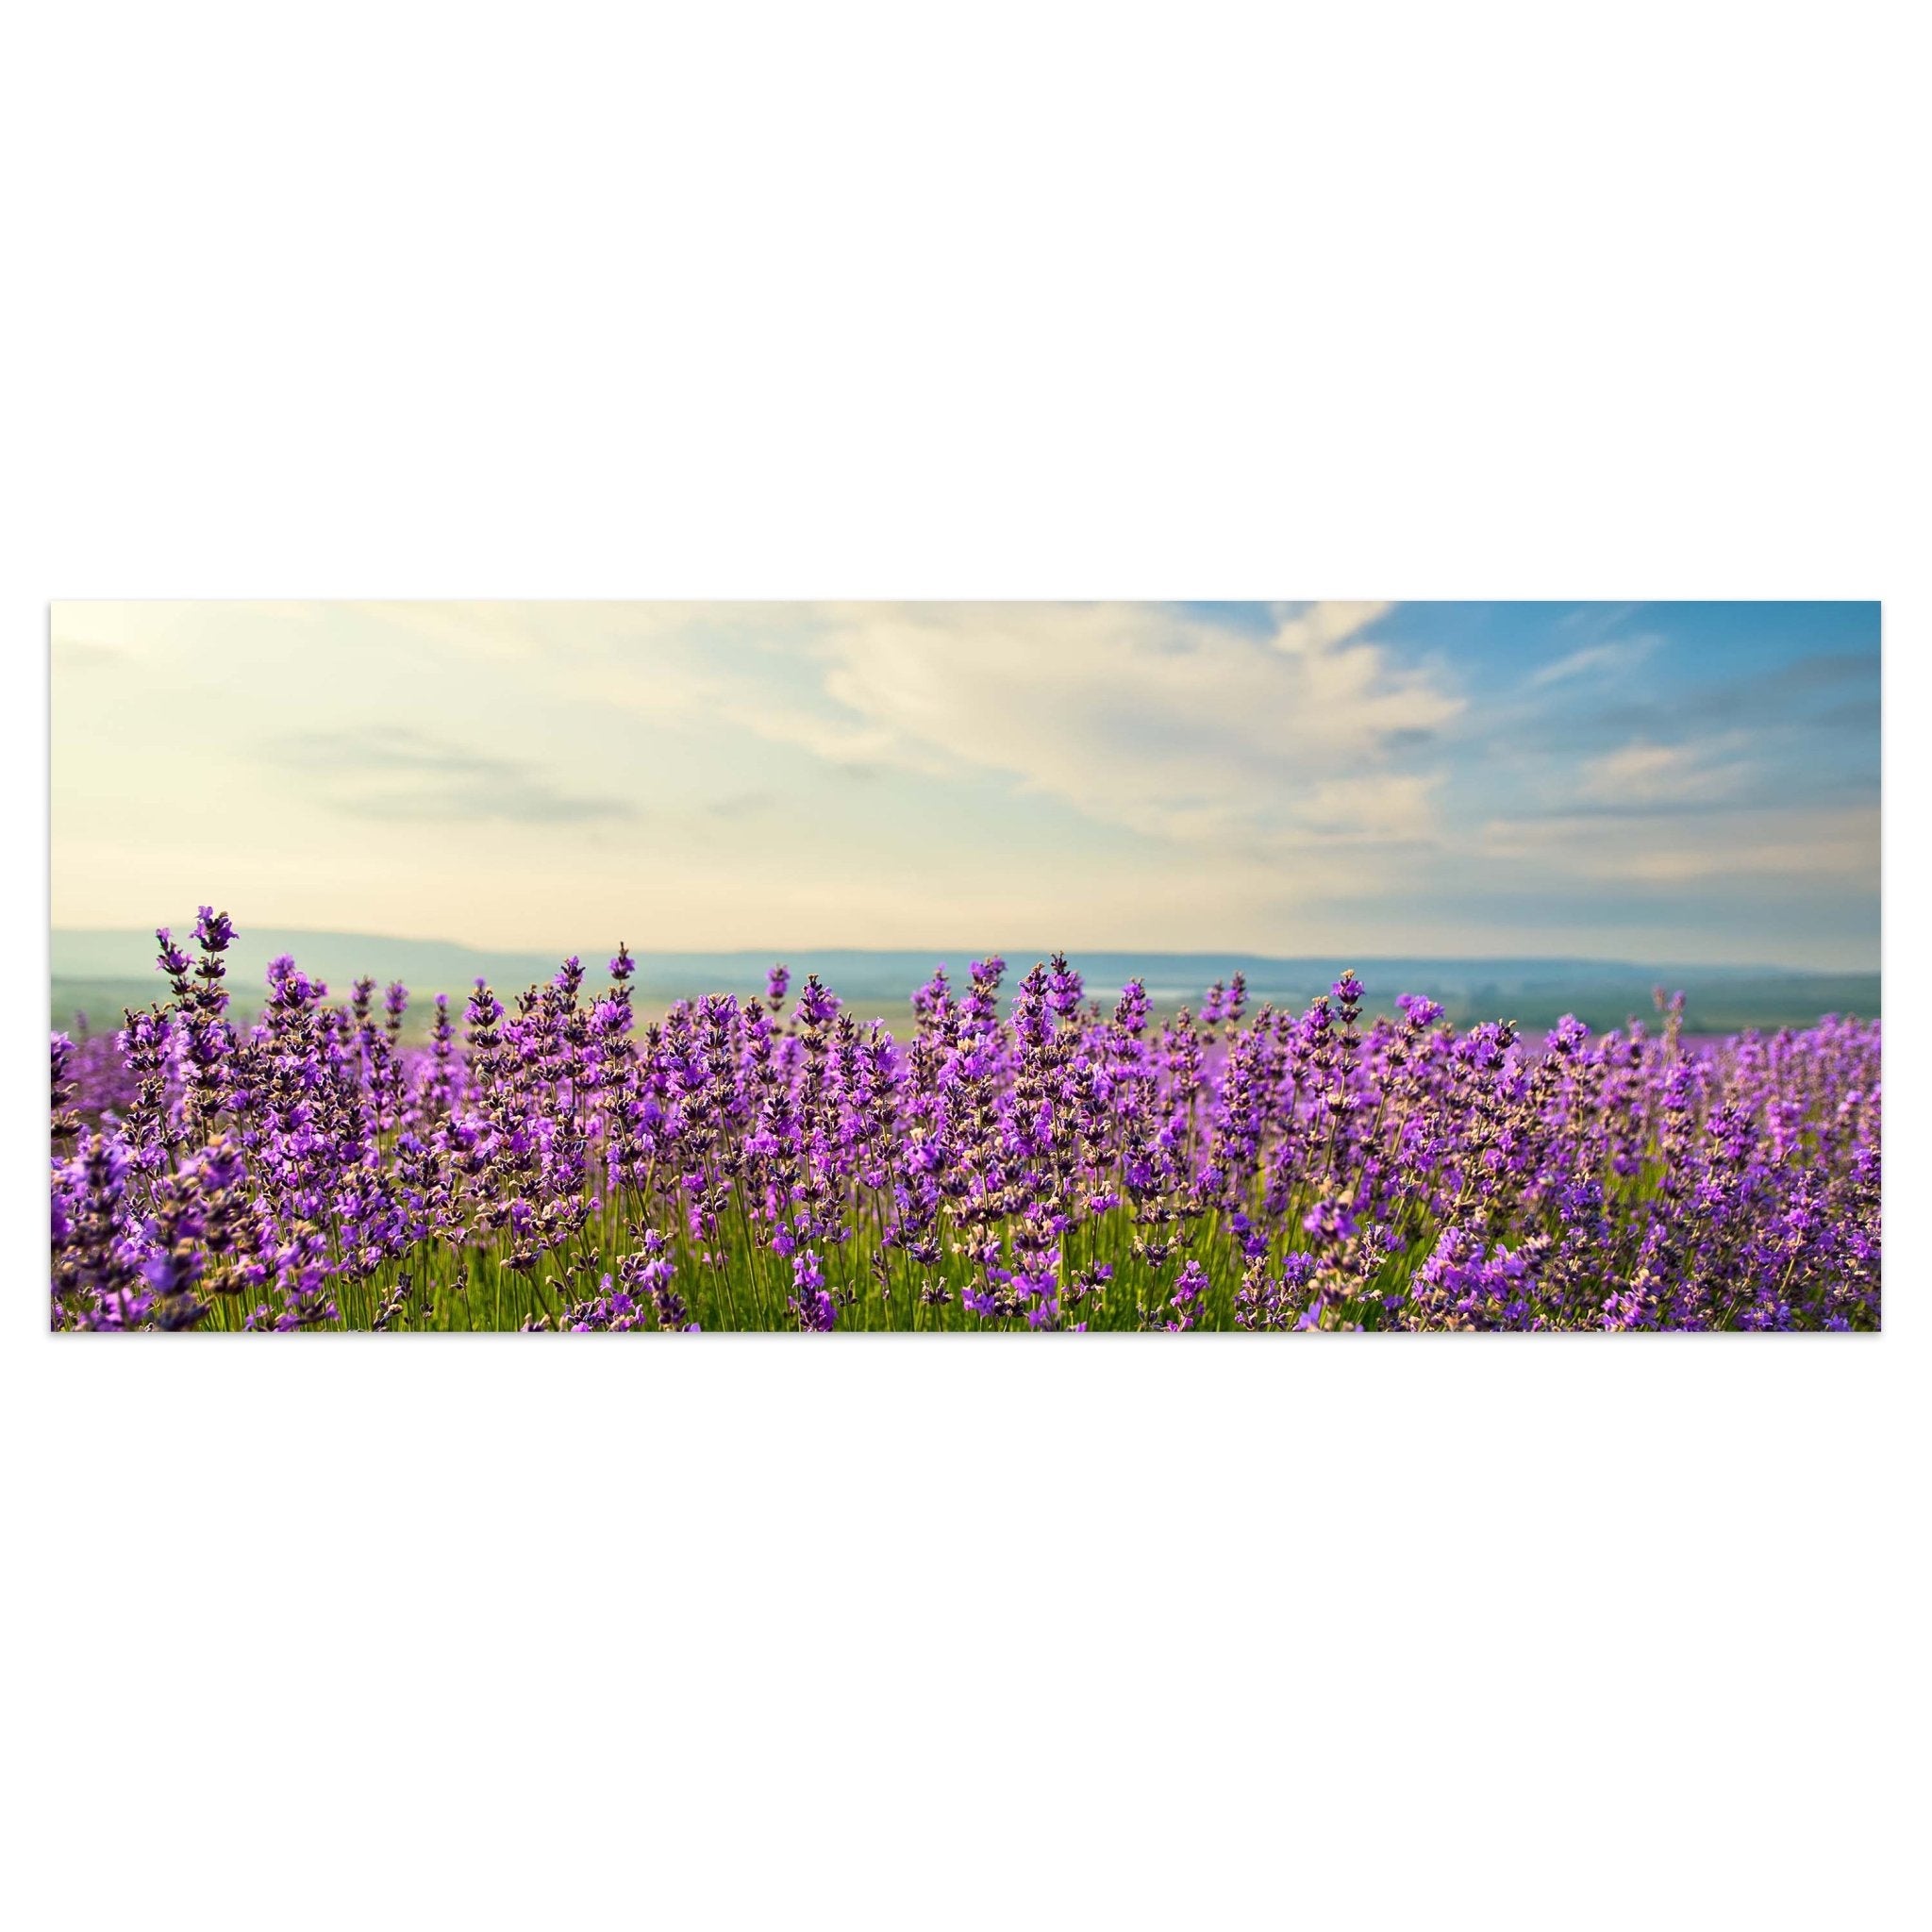 Leinwandbild Lavendel M0411 kaufen - Bild 1